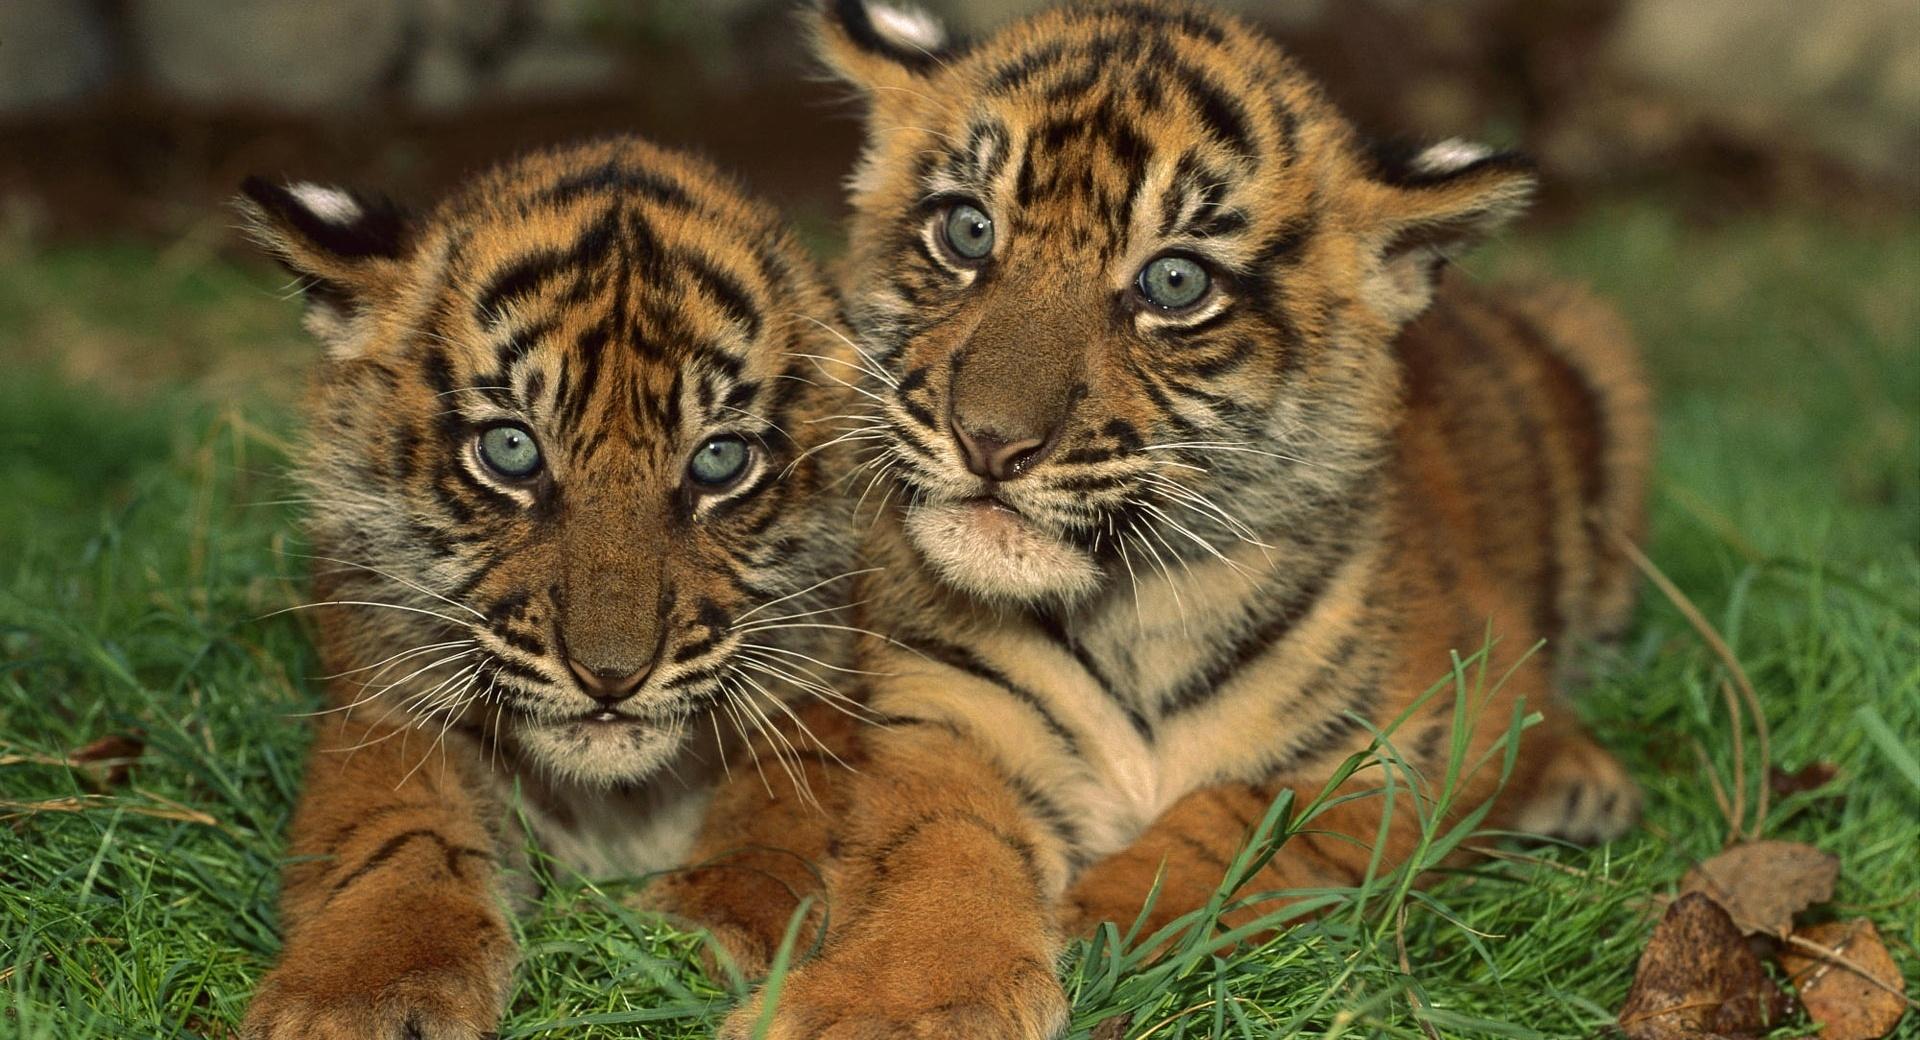 Sumatran Tiger Cubs at 1024 x 768 size wallpapers HD quality